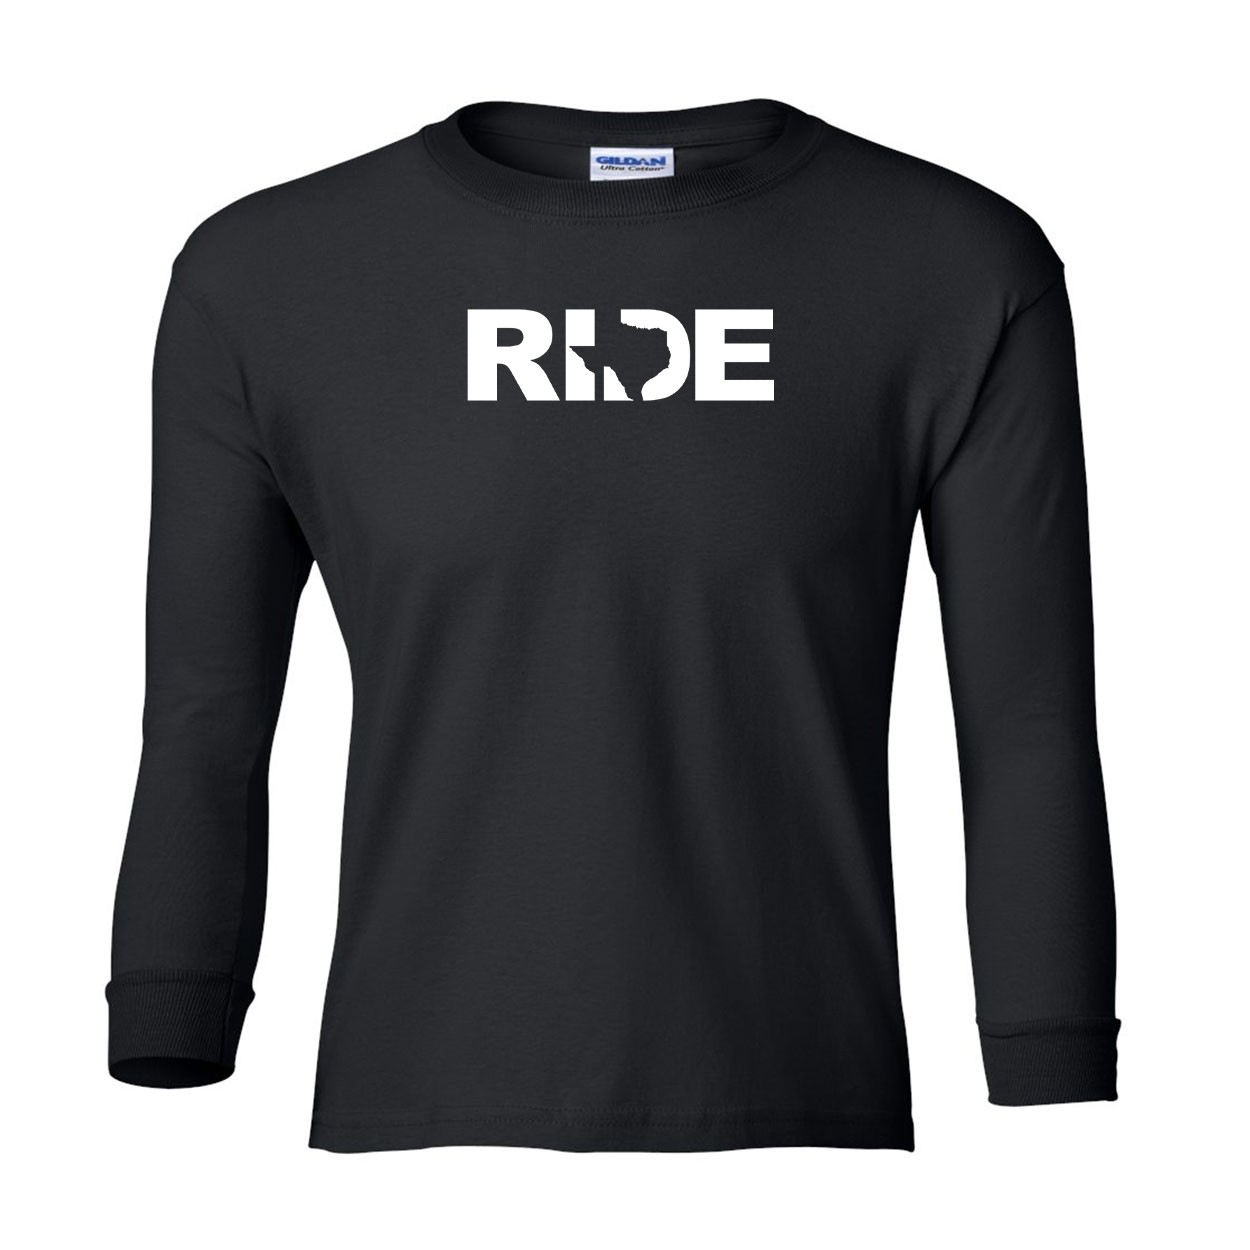 Ride Texas Classic Youth Unisex Long Sleeve T-Shirt Black (White Logo)